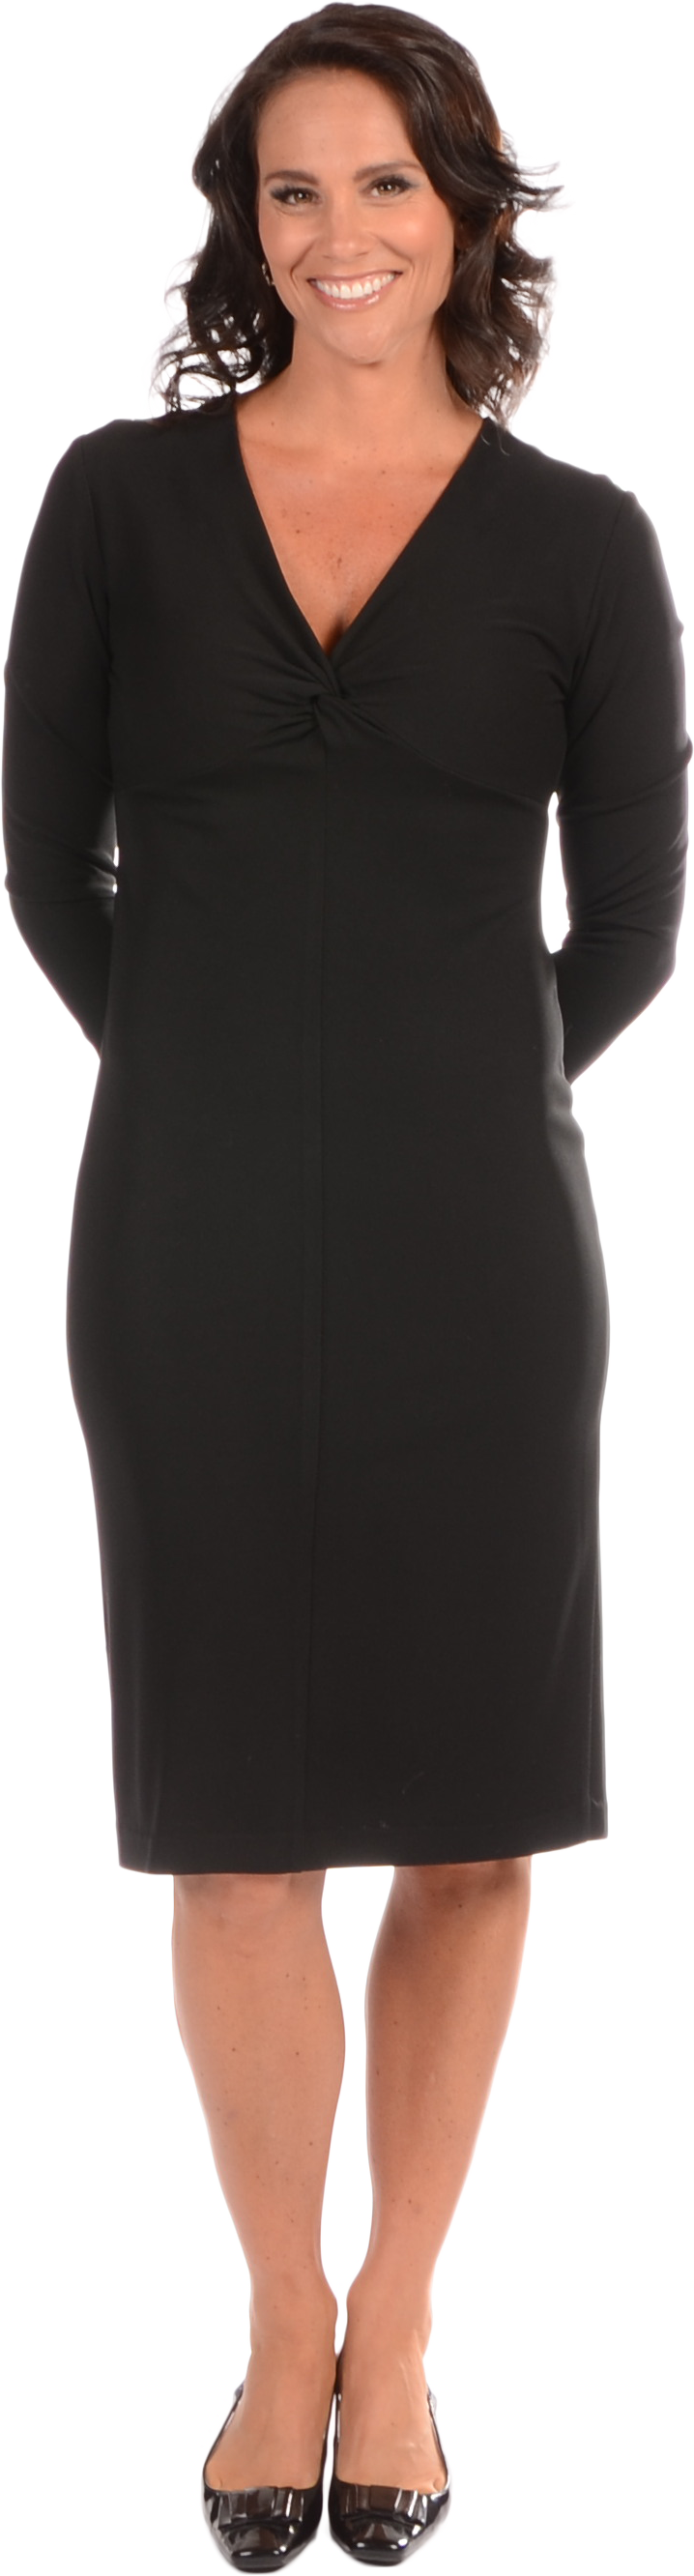 Confident Womanin Black Dress PNG